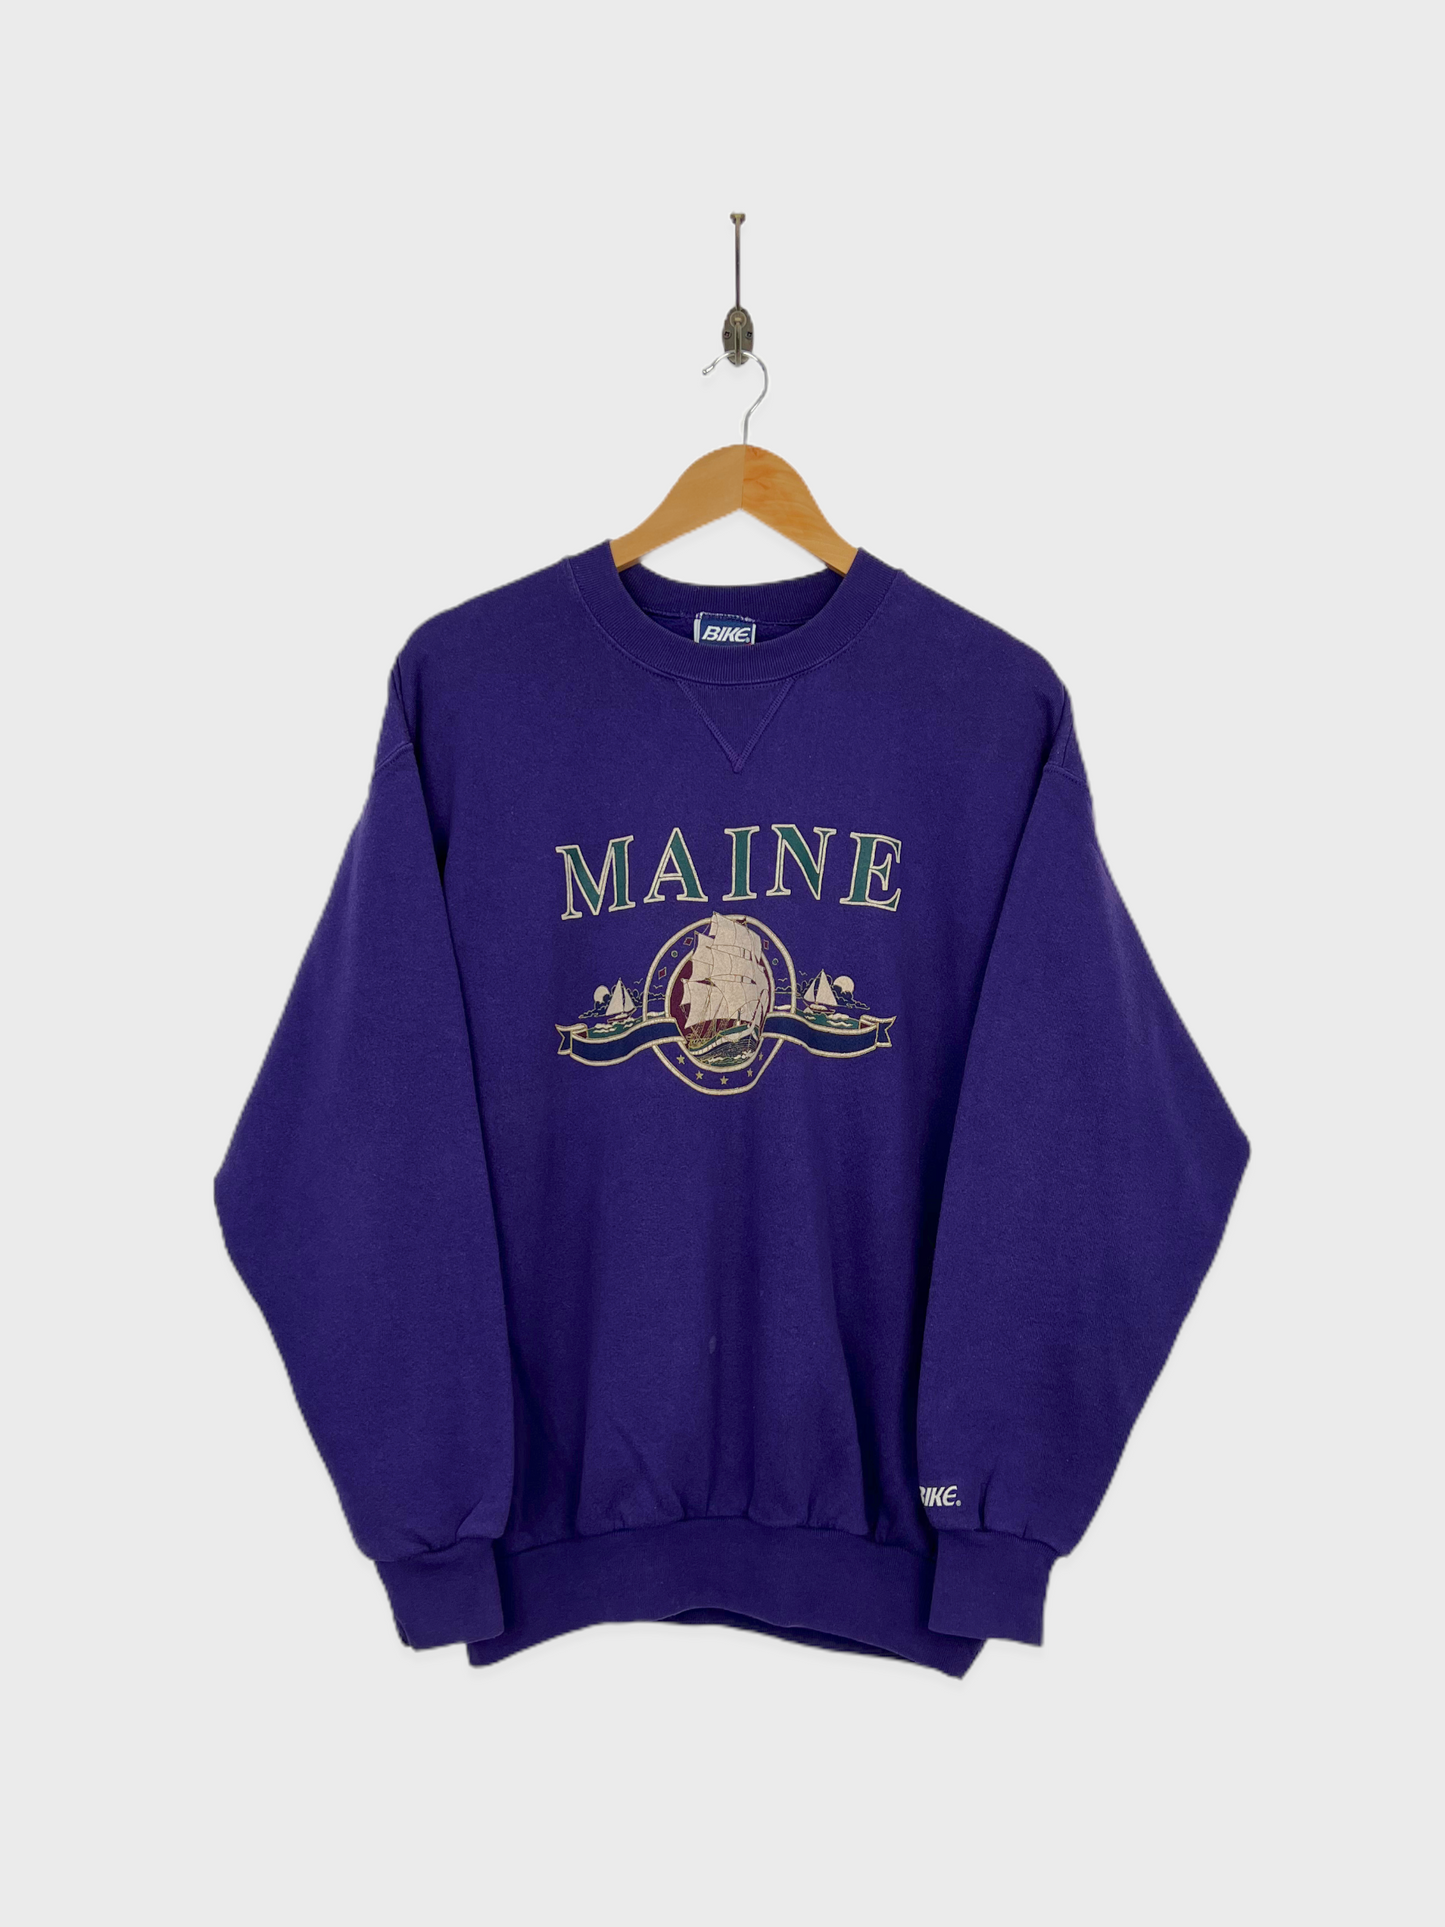 90's Maine USA Made Vintage Sweatshirt Size 8